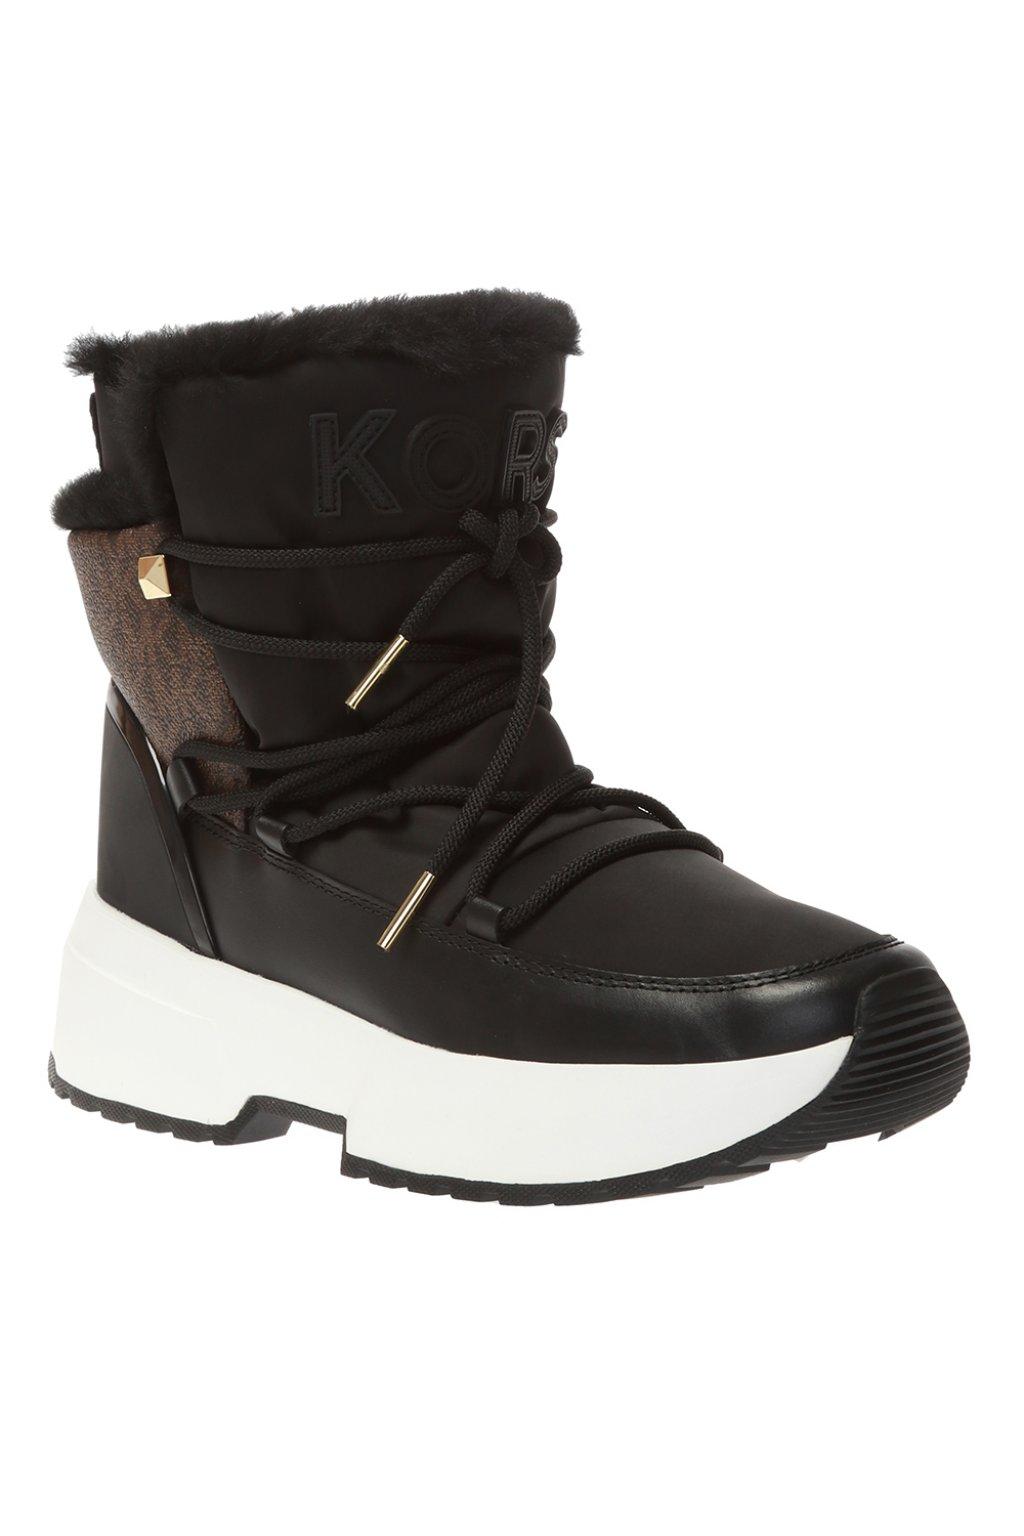 Michael Kors 'cassia' Snow Boots in Black | Lyst